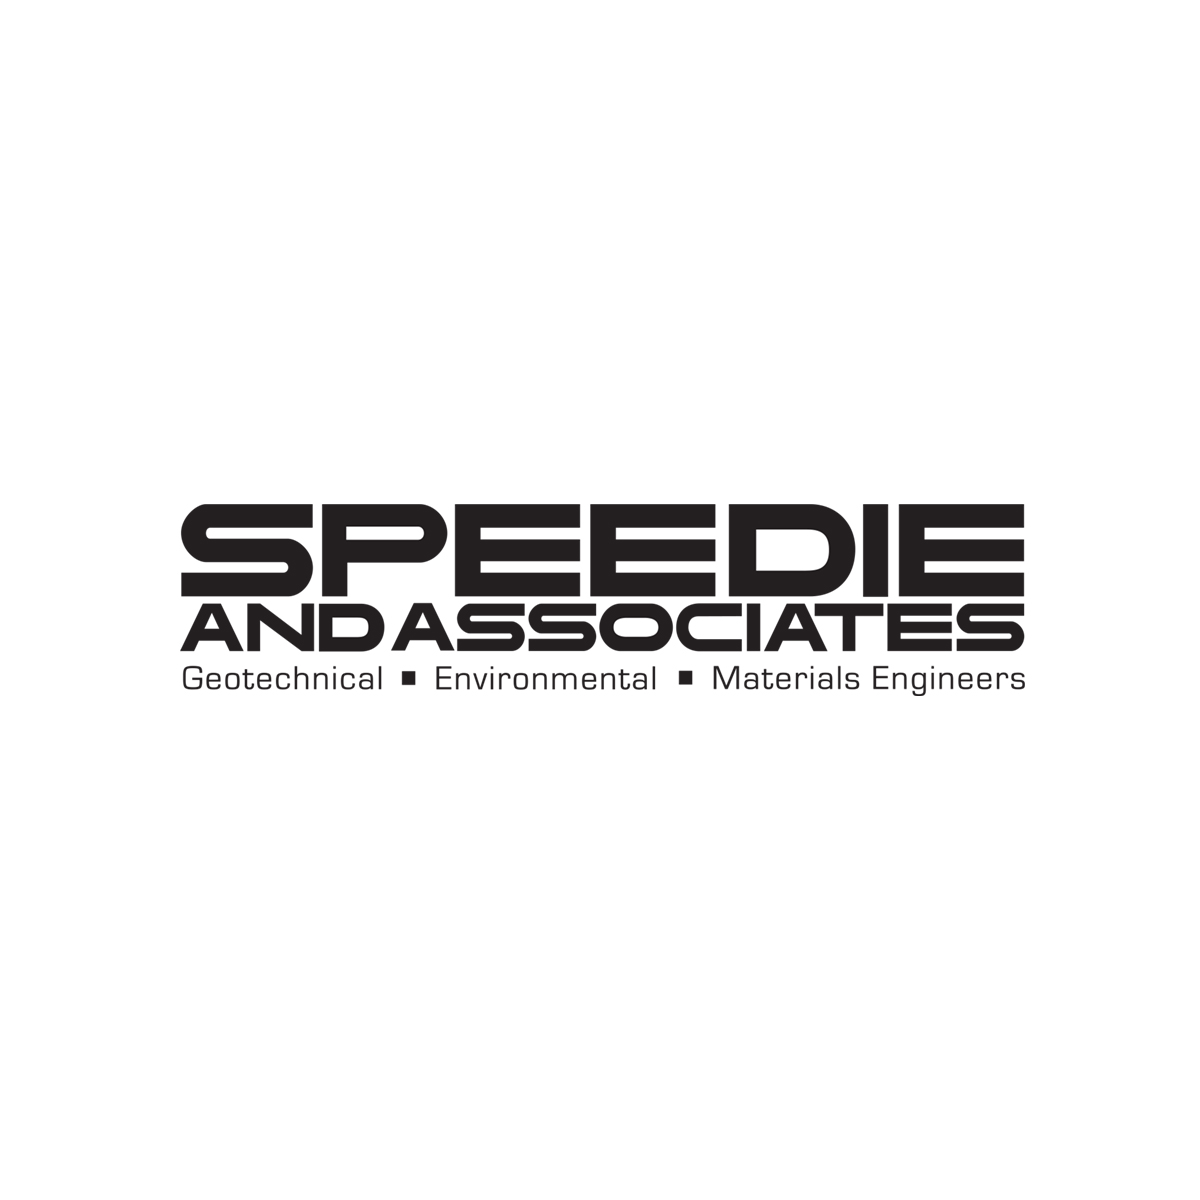 Speedie and Associates logo.jpg